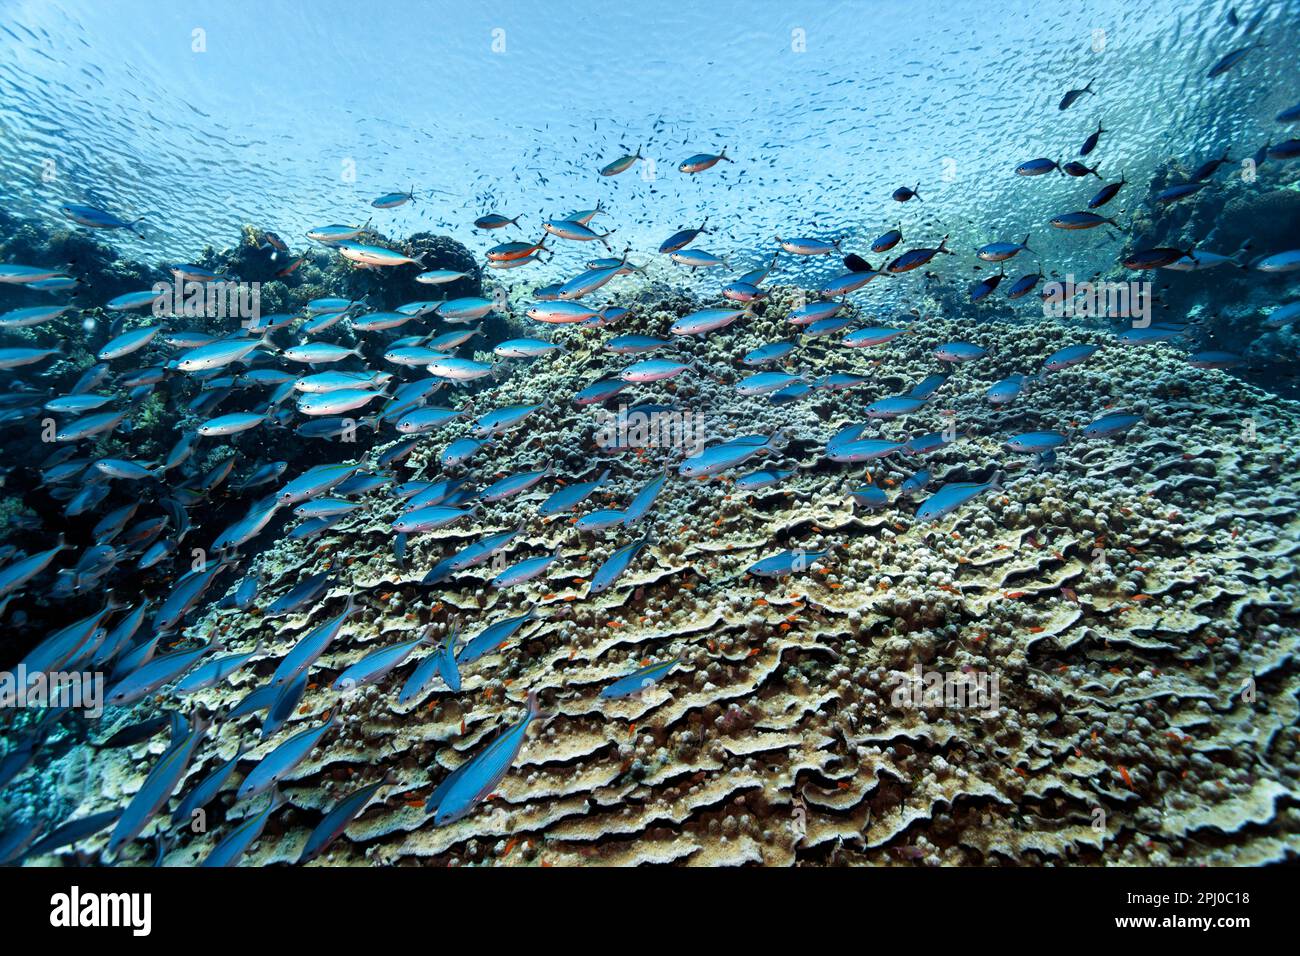 Acropora coral (Acropora danai) on coral reef wall, shoal, school of fish Thin-line fusilier (Caesio varilineata) Red Sea, Daedalus Reef, Marsa Alam Stock Photo